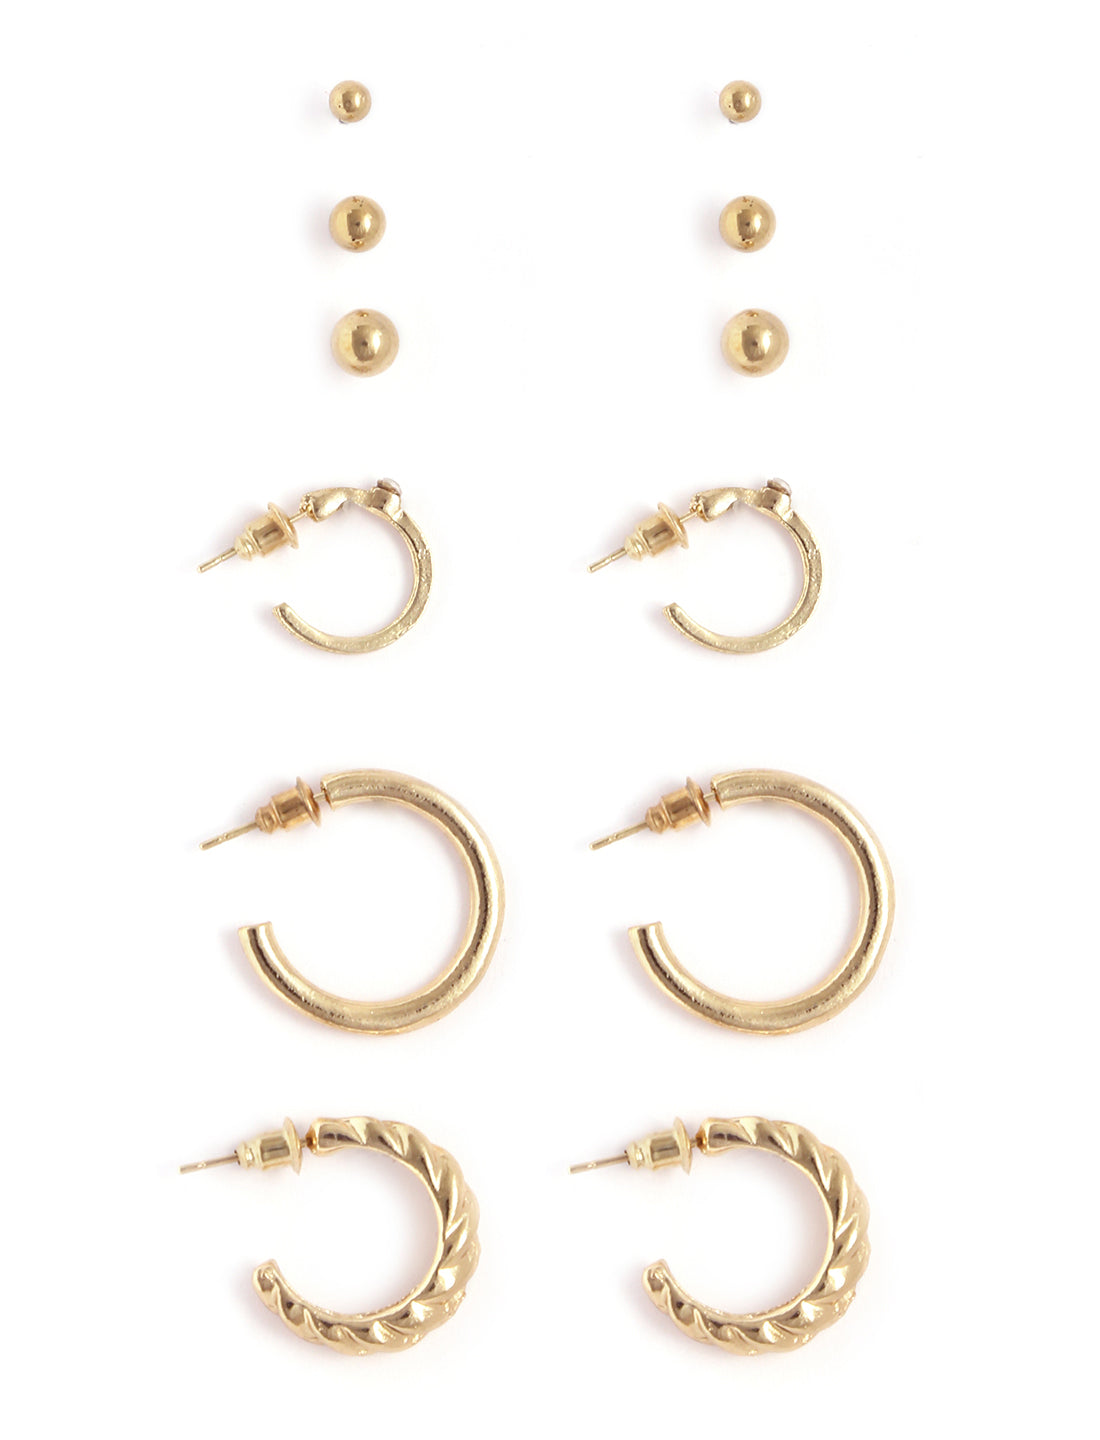 Buy Cc Earrings Online Shopping at